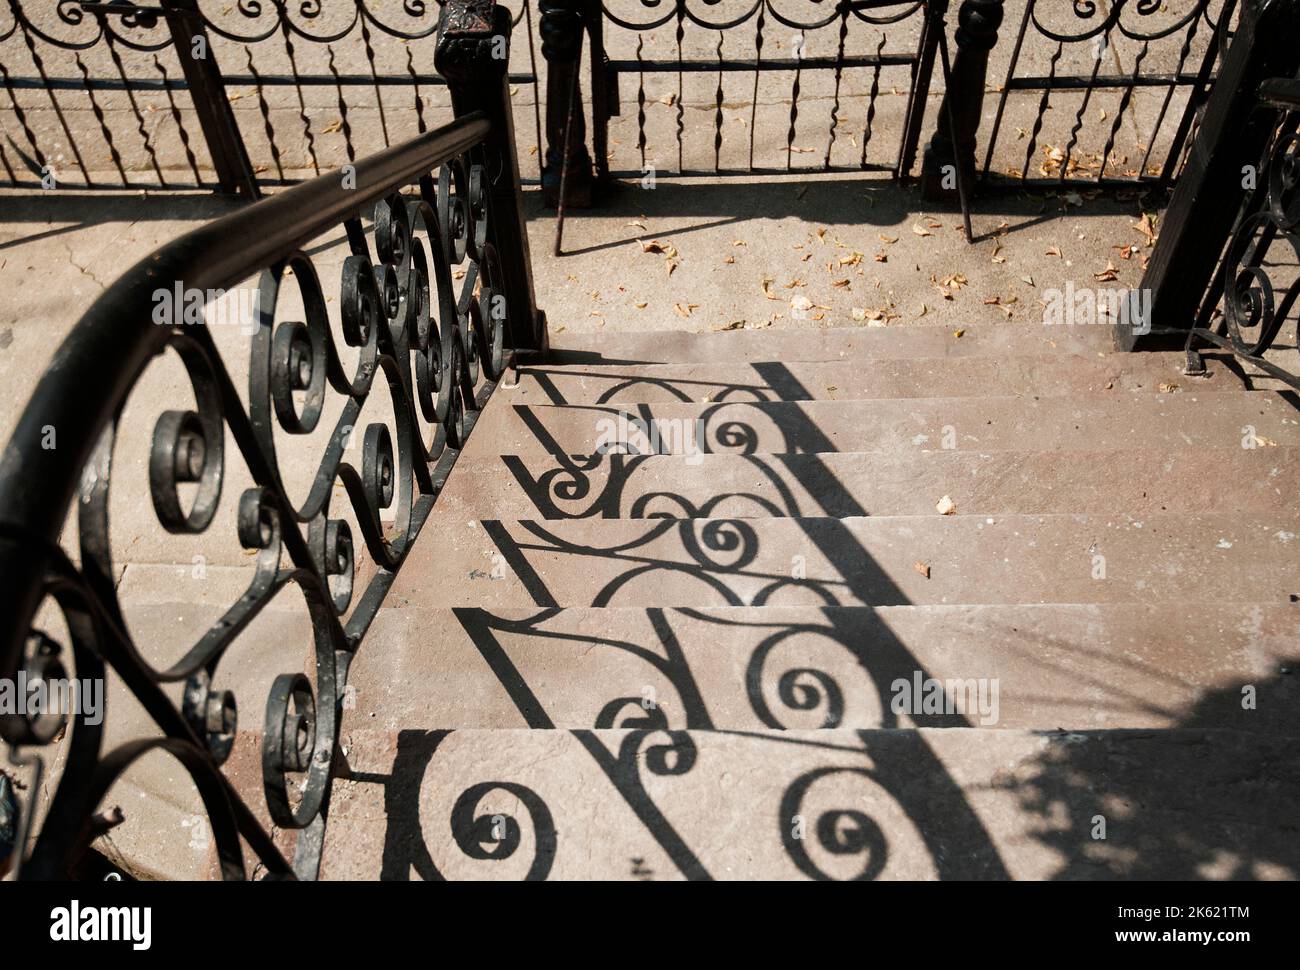 Cast iron fences and cast shadows in Ridgewood New York neighborhood Stock Photo